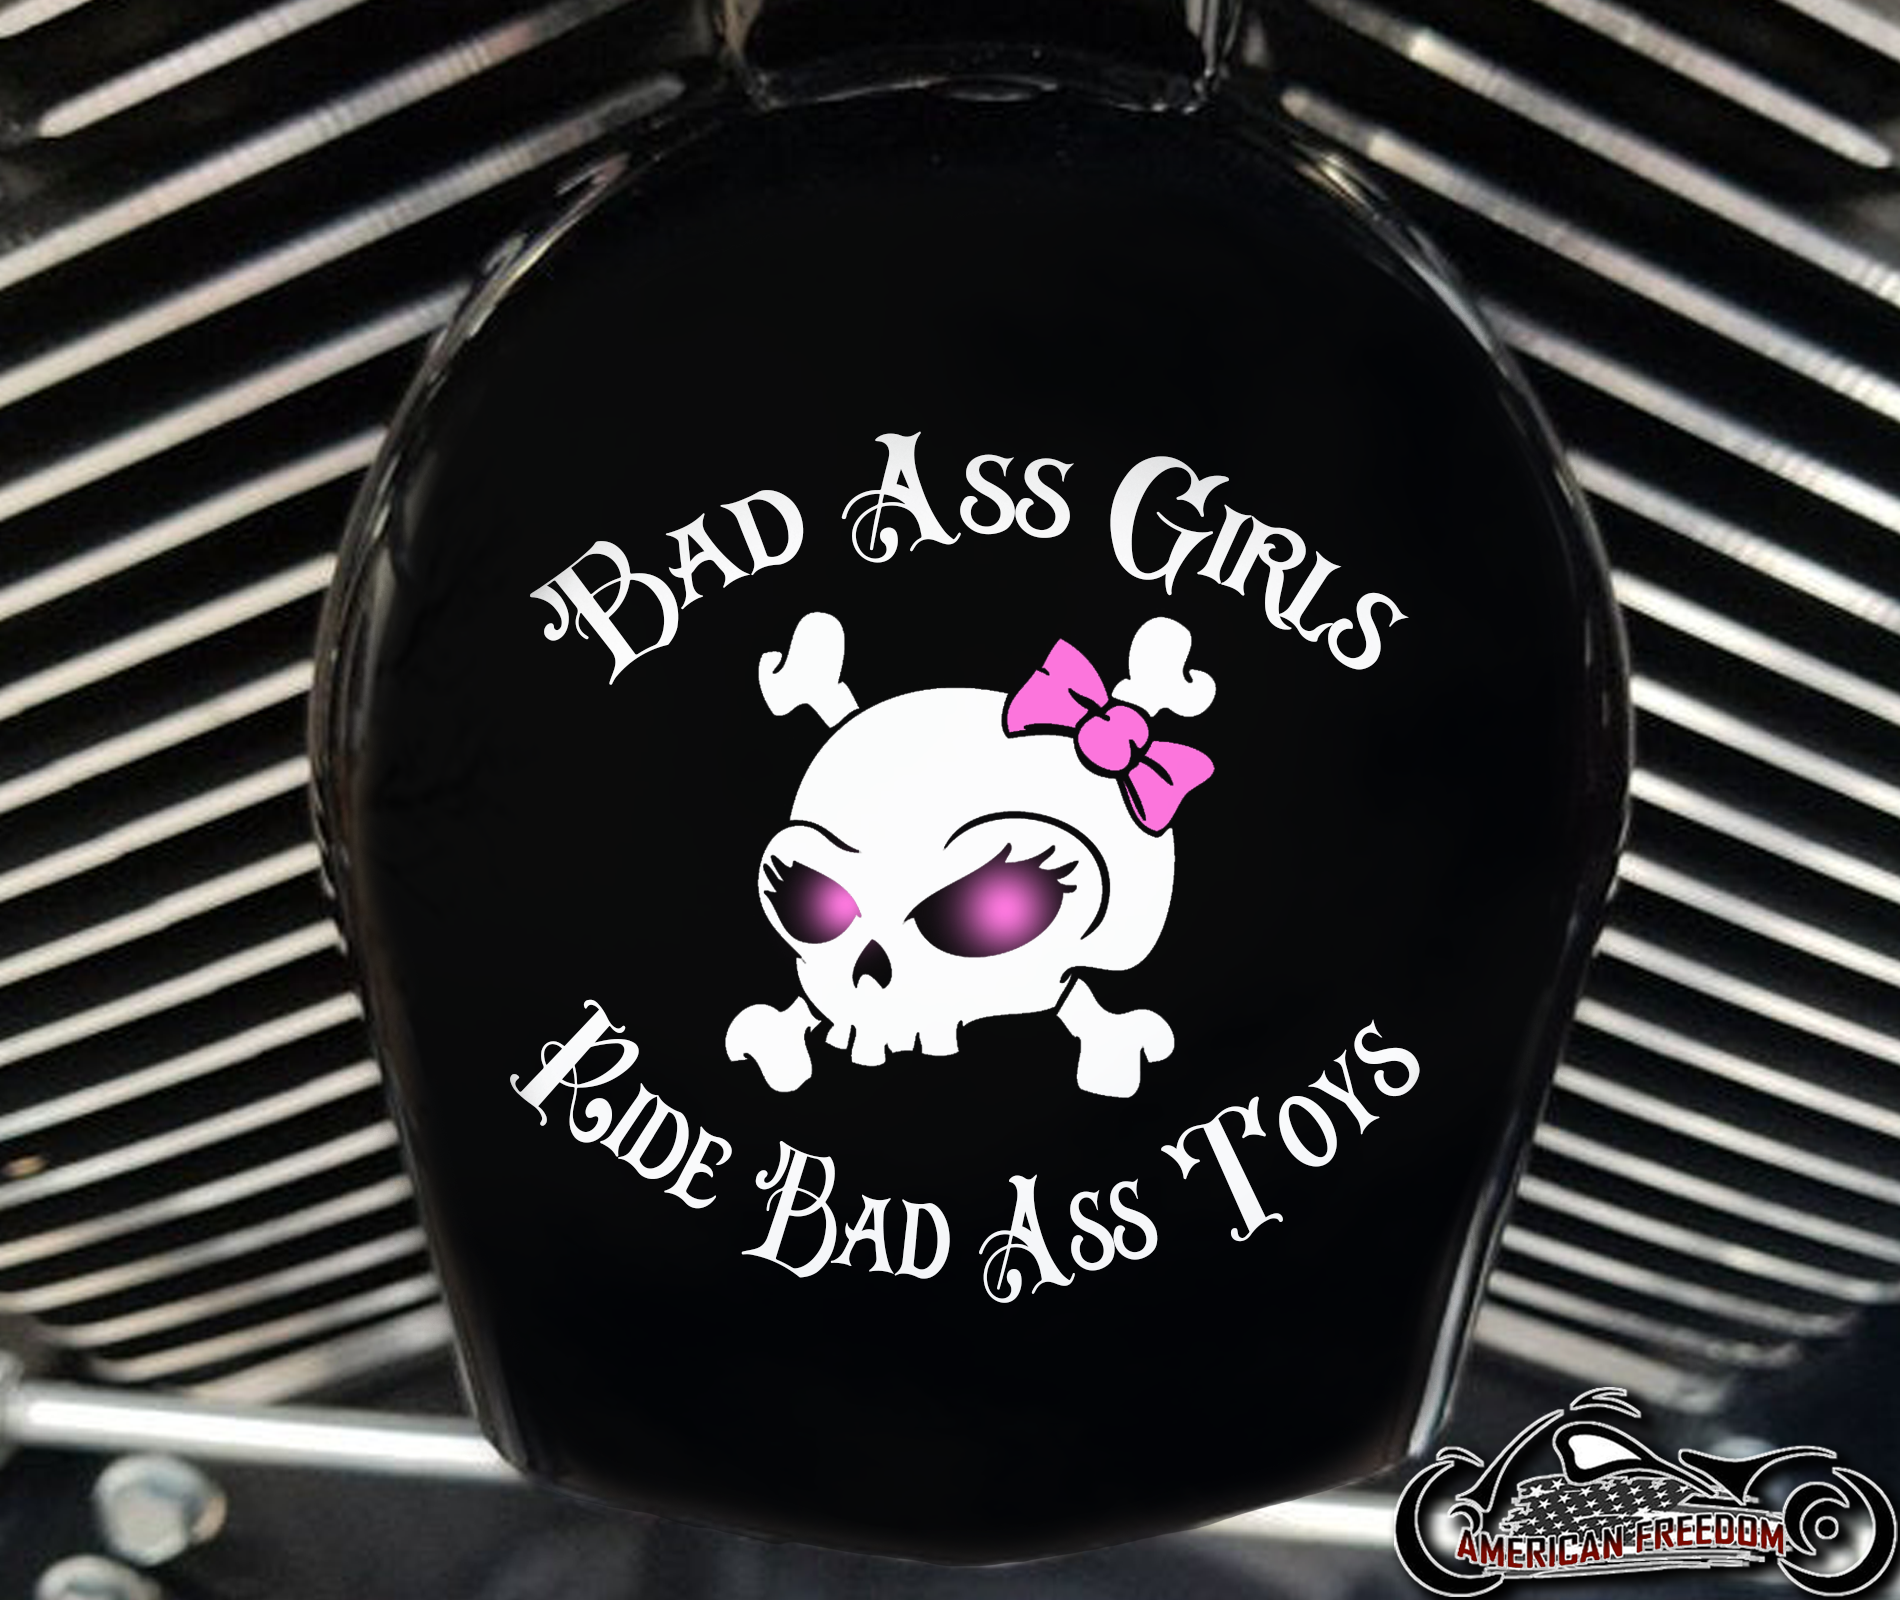 Custom Horn Cover - Bad Ass Girls Pink